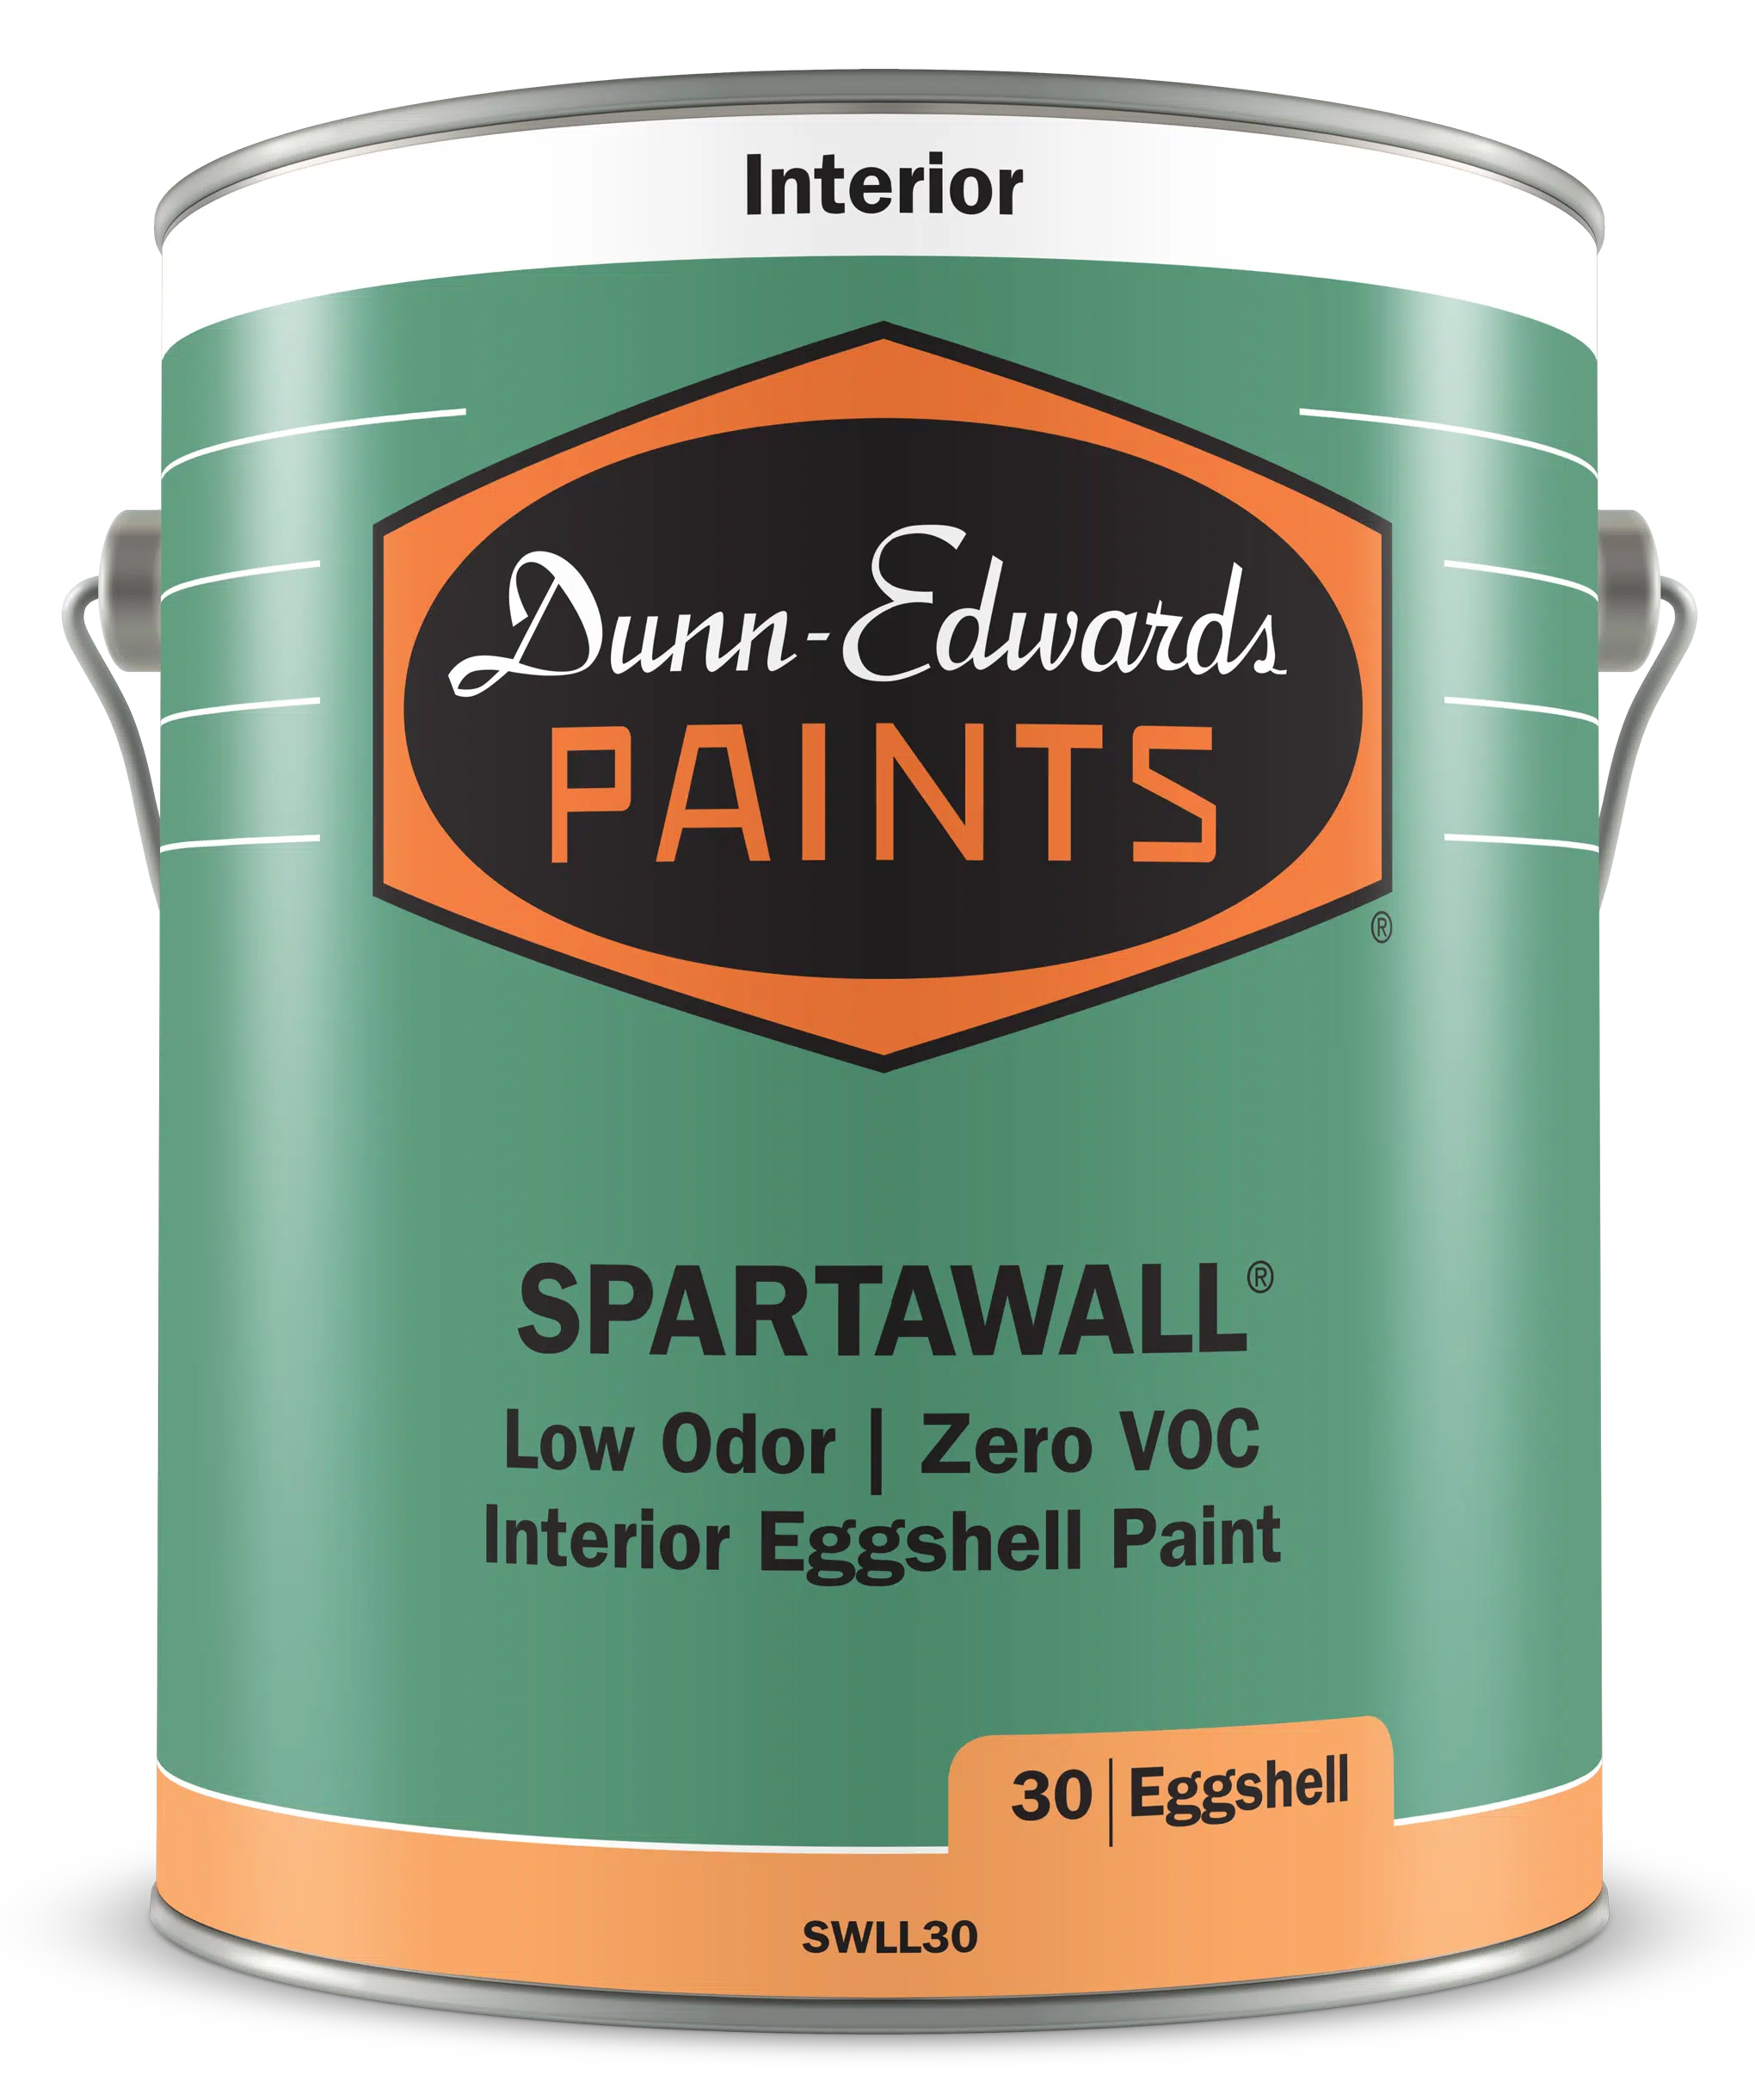 SPARTAWALL Interior Eggshell Paint Can